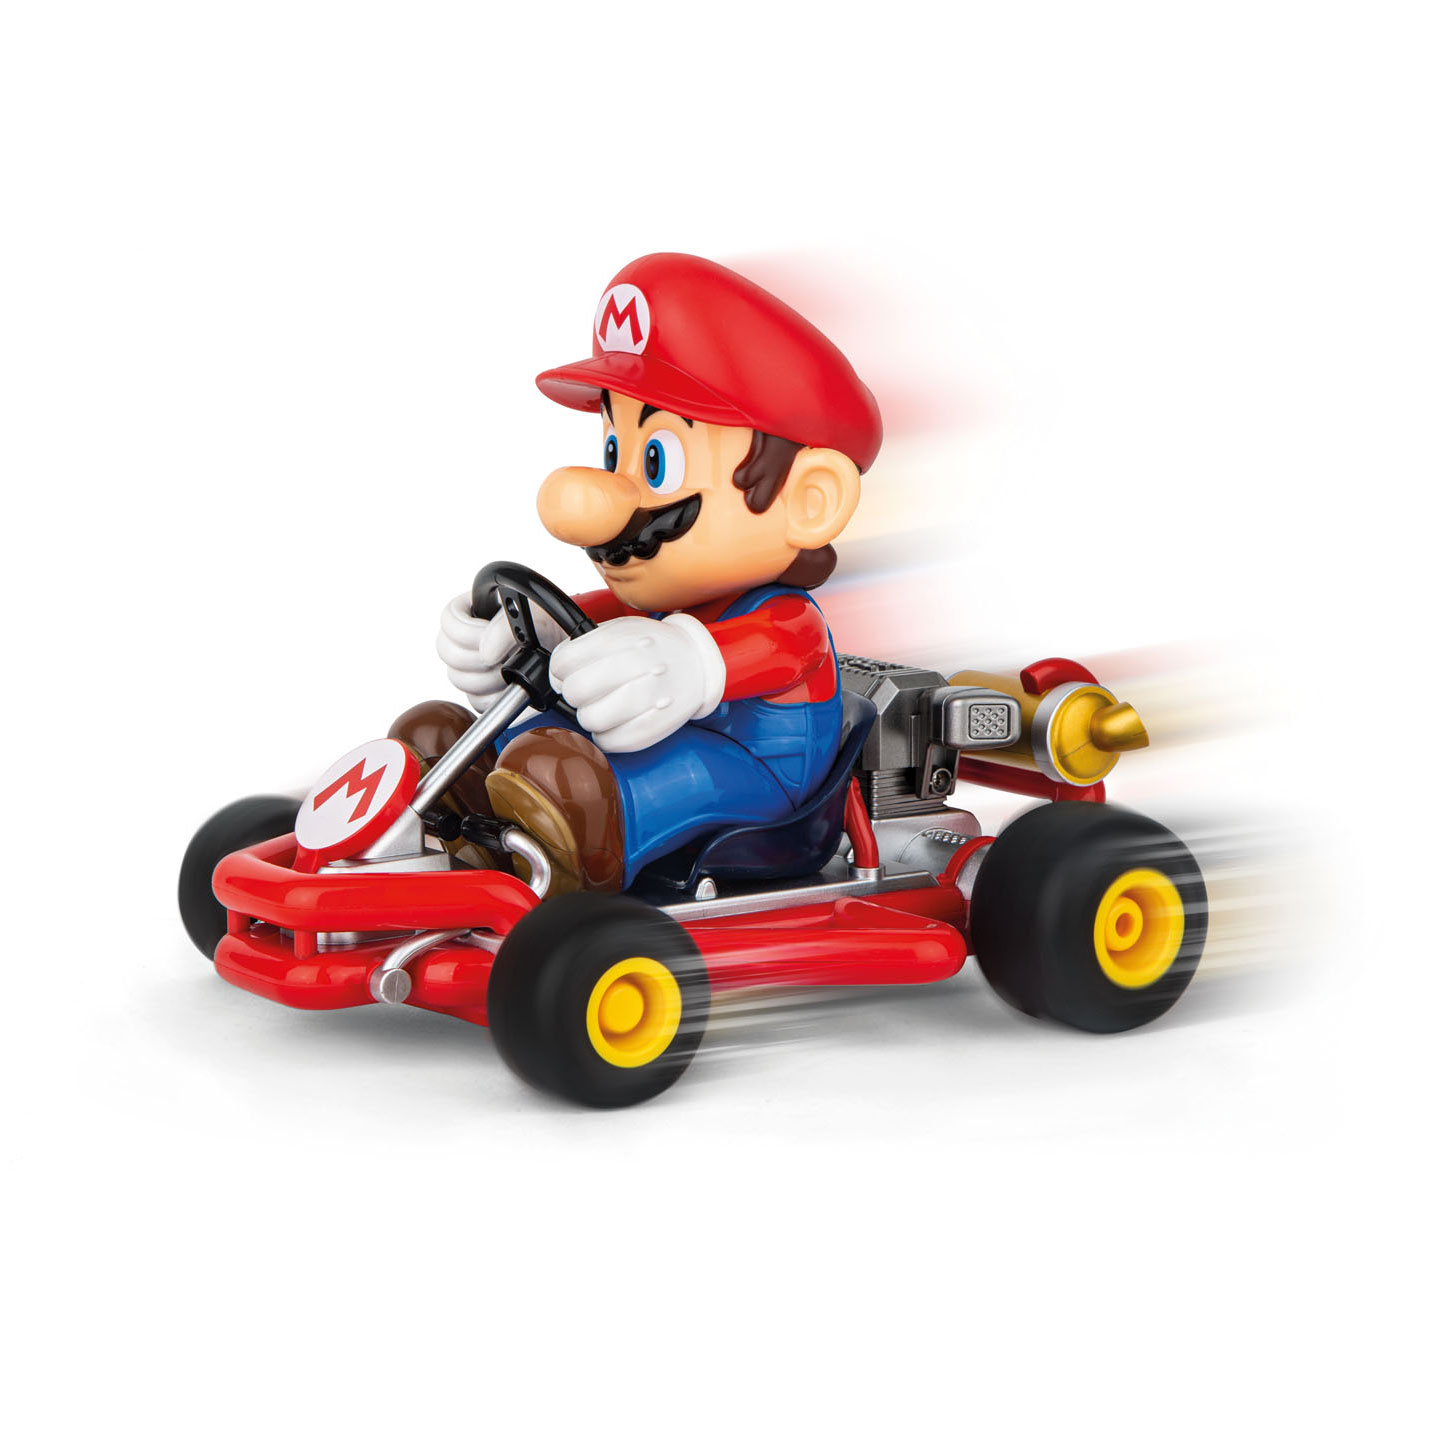 Voiture télécommandée Carrera Super Mario Pipe Kart